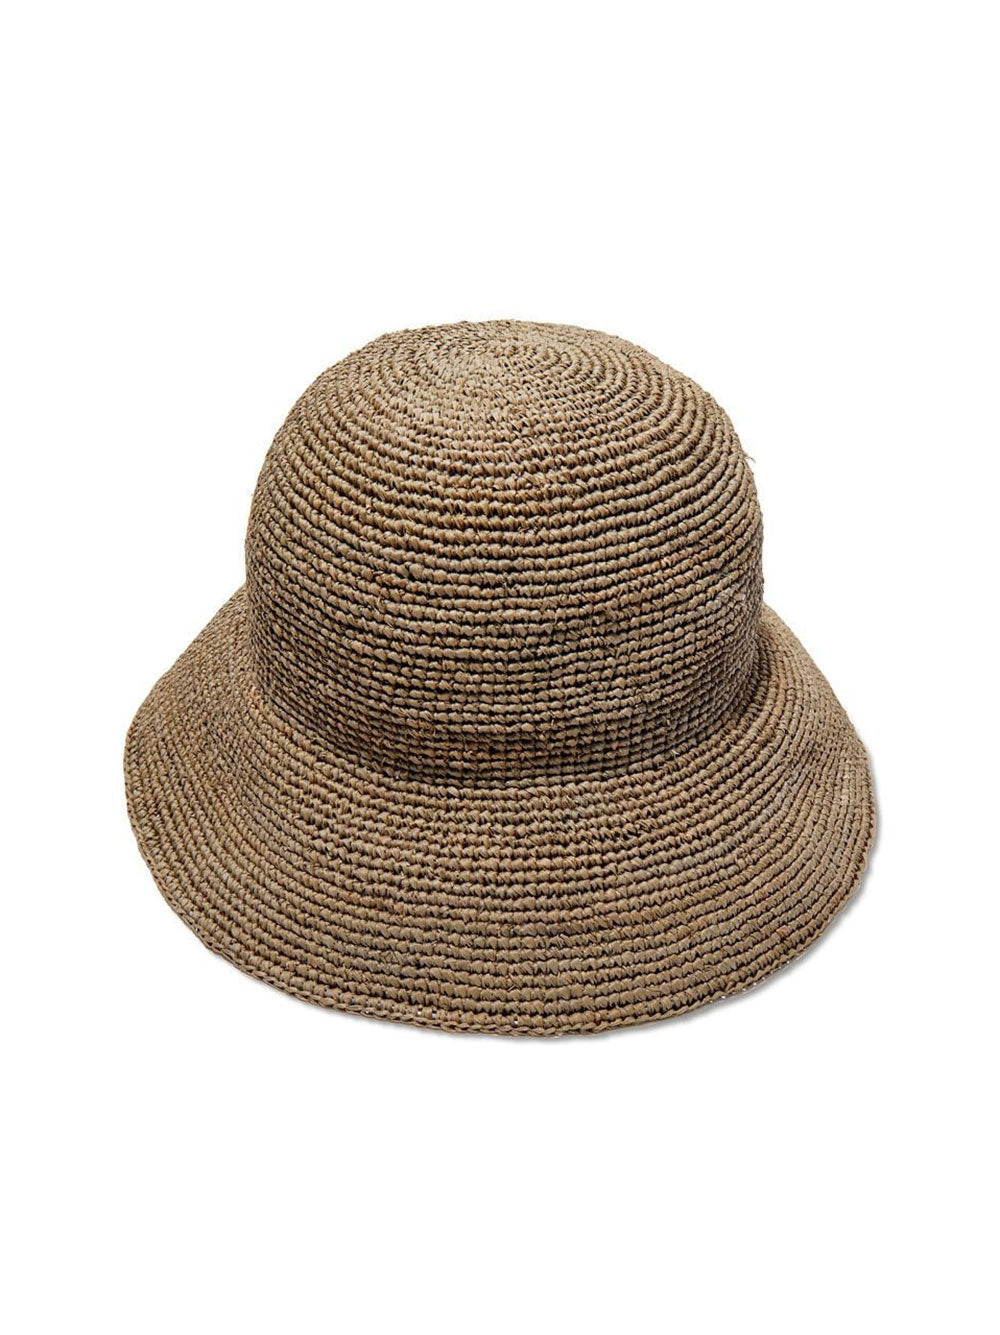 Lele Sadoughi Round Raffia Bucket Hat in Moss